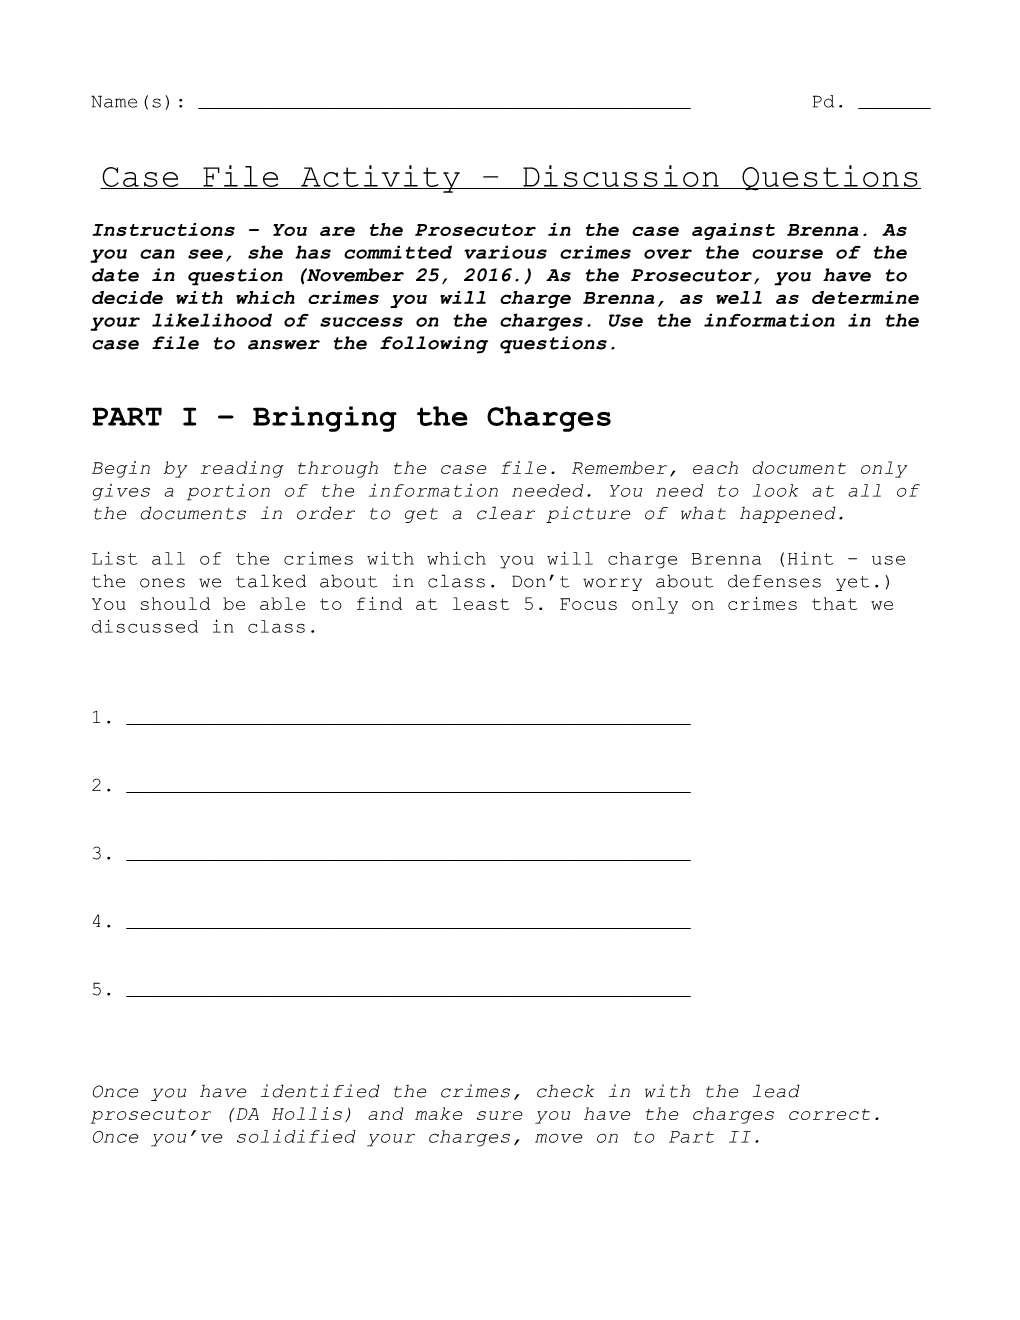 Case File Activity Discussion Questions